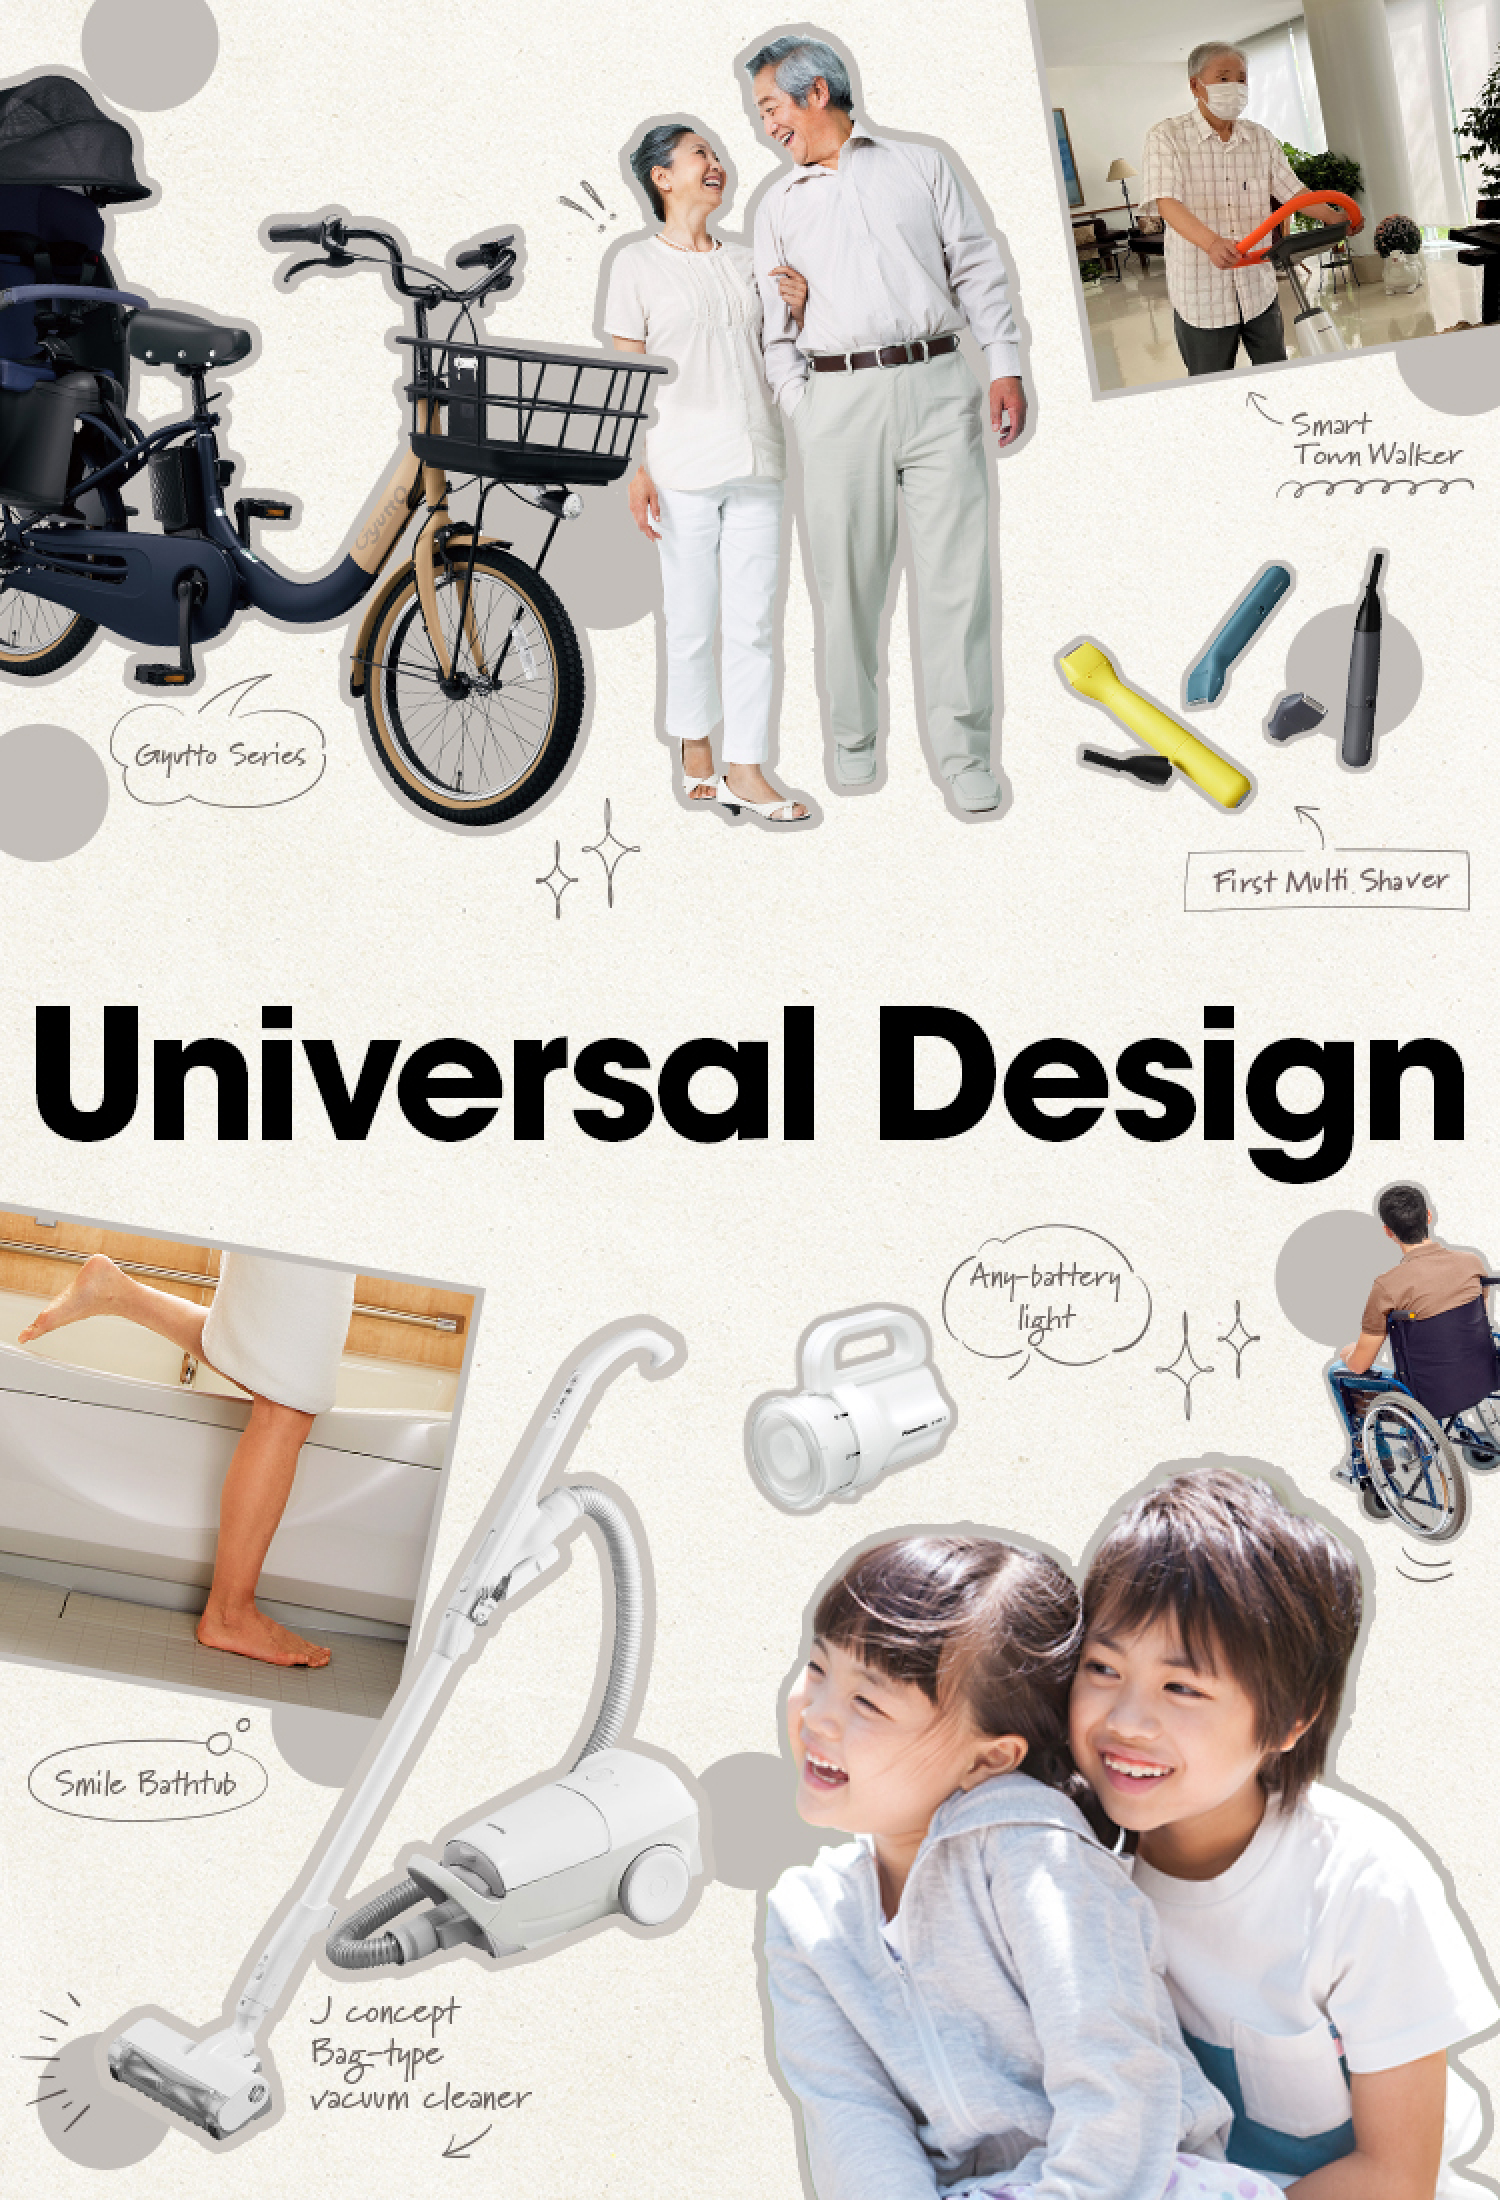 The Universal Design